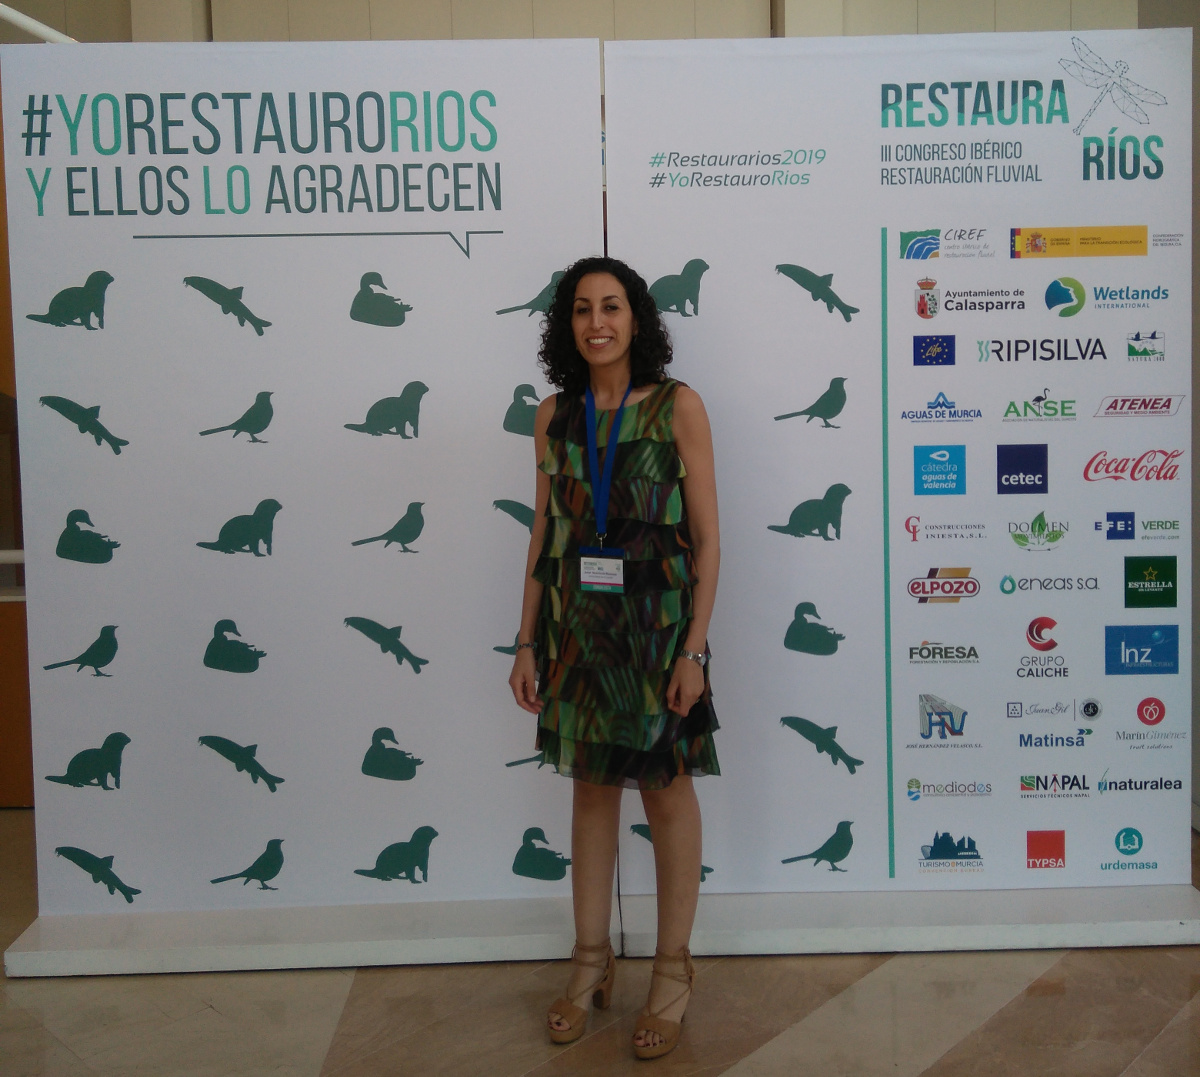 Image Biodiversity and perspectives to the restoration of Monelos river basin (A Coruña, Galicia) at the Restaura Ríos 2019 Congress (River Restoration 2019 Congress).